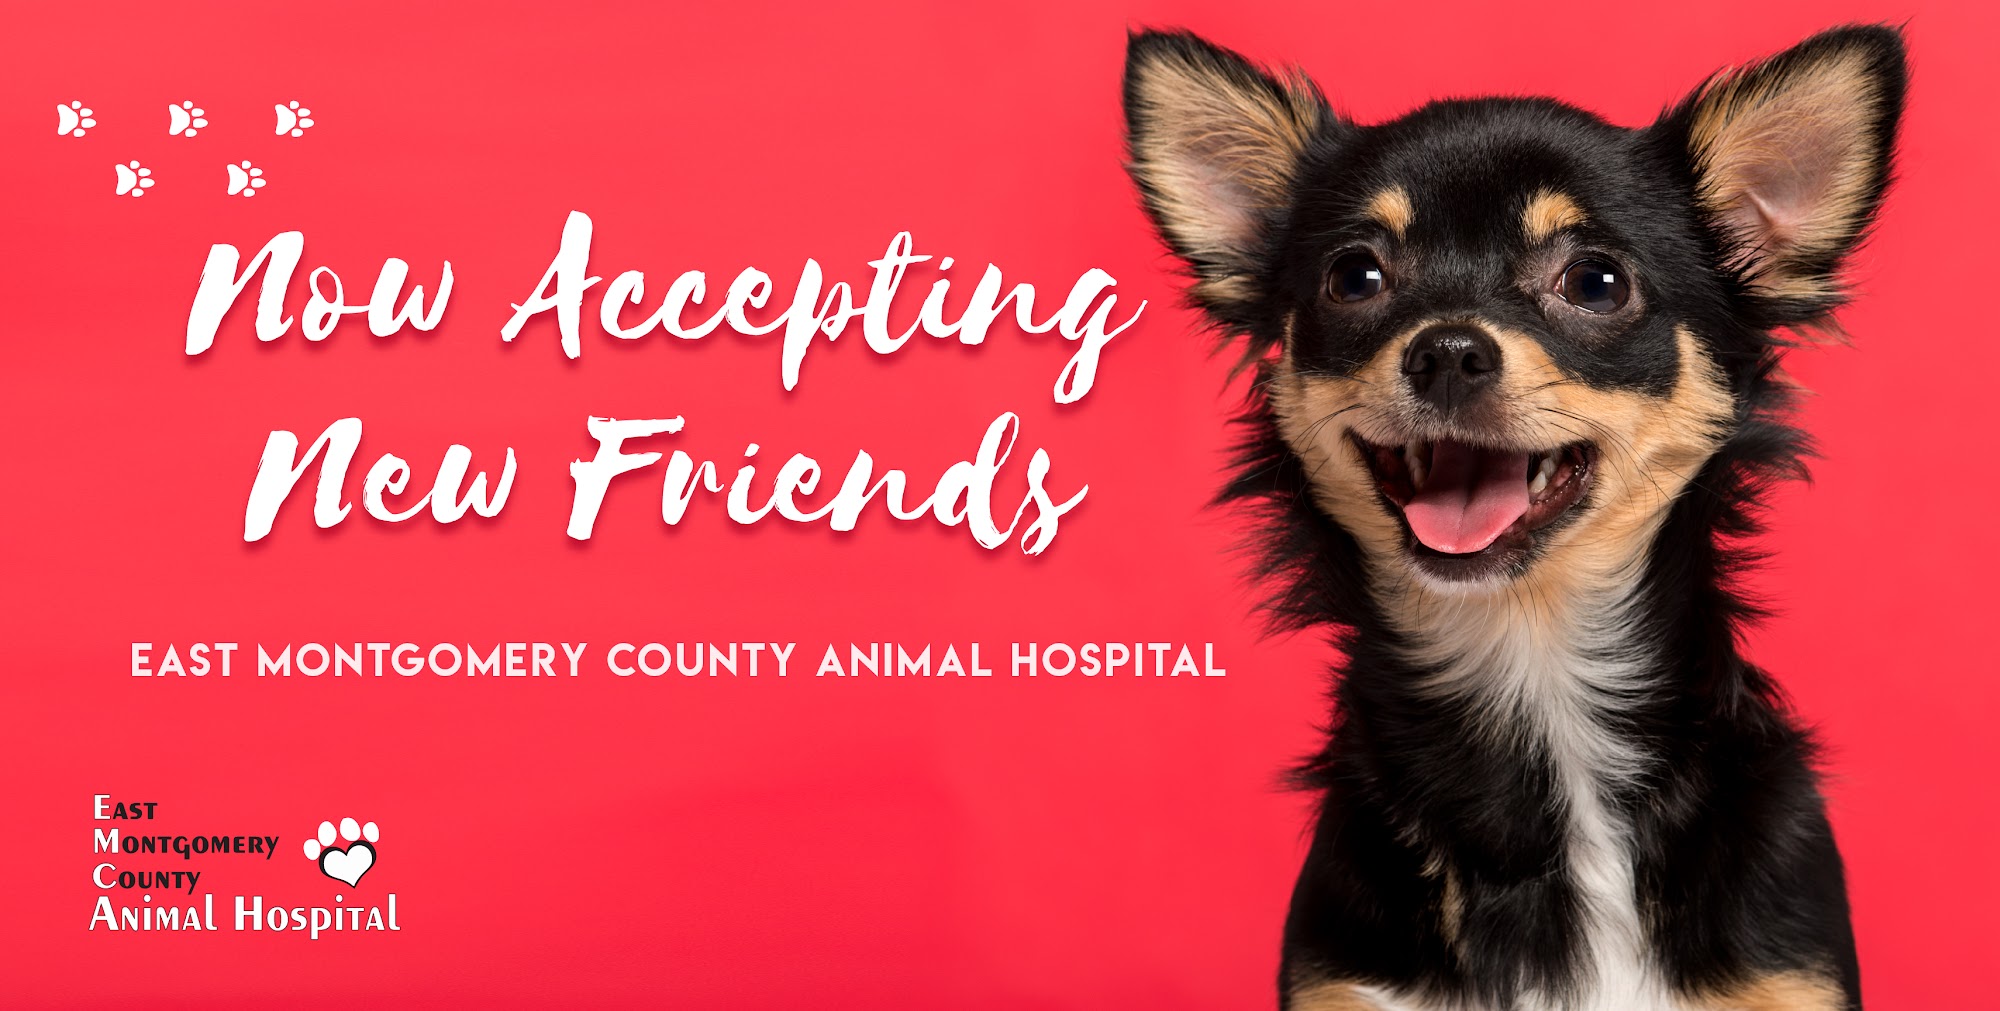 East Montgomery County Animal Hospital